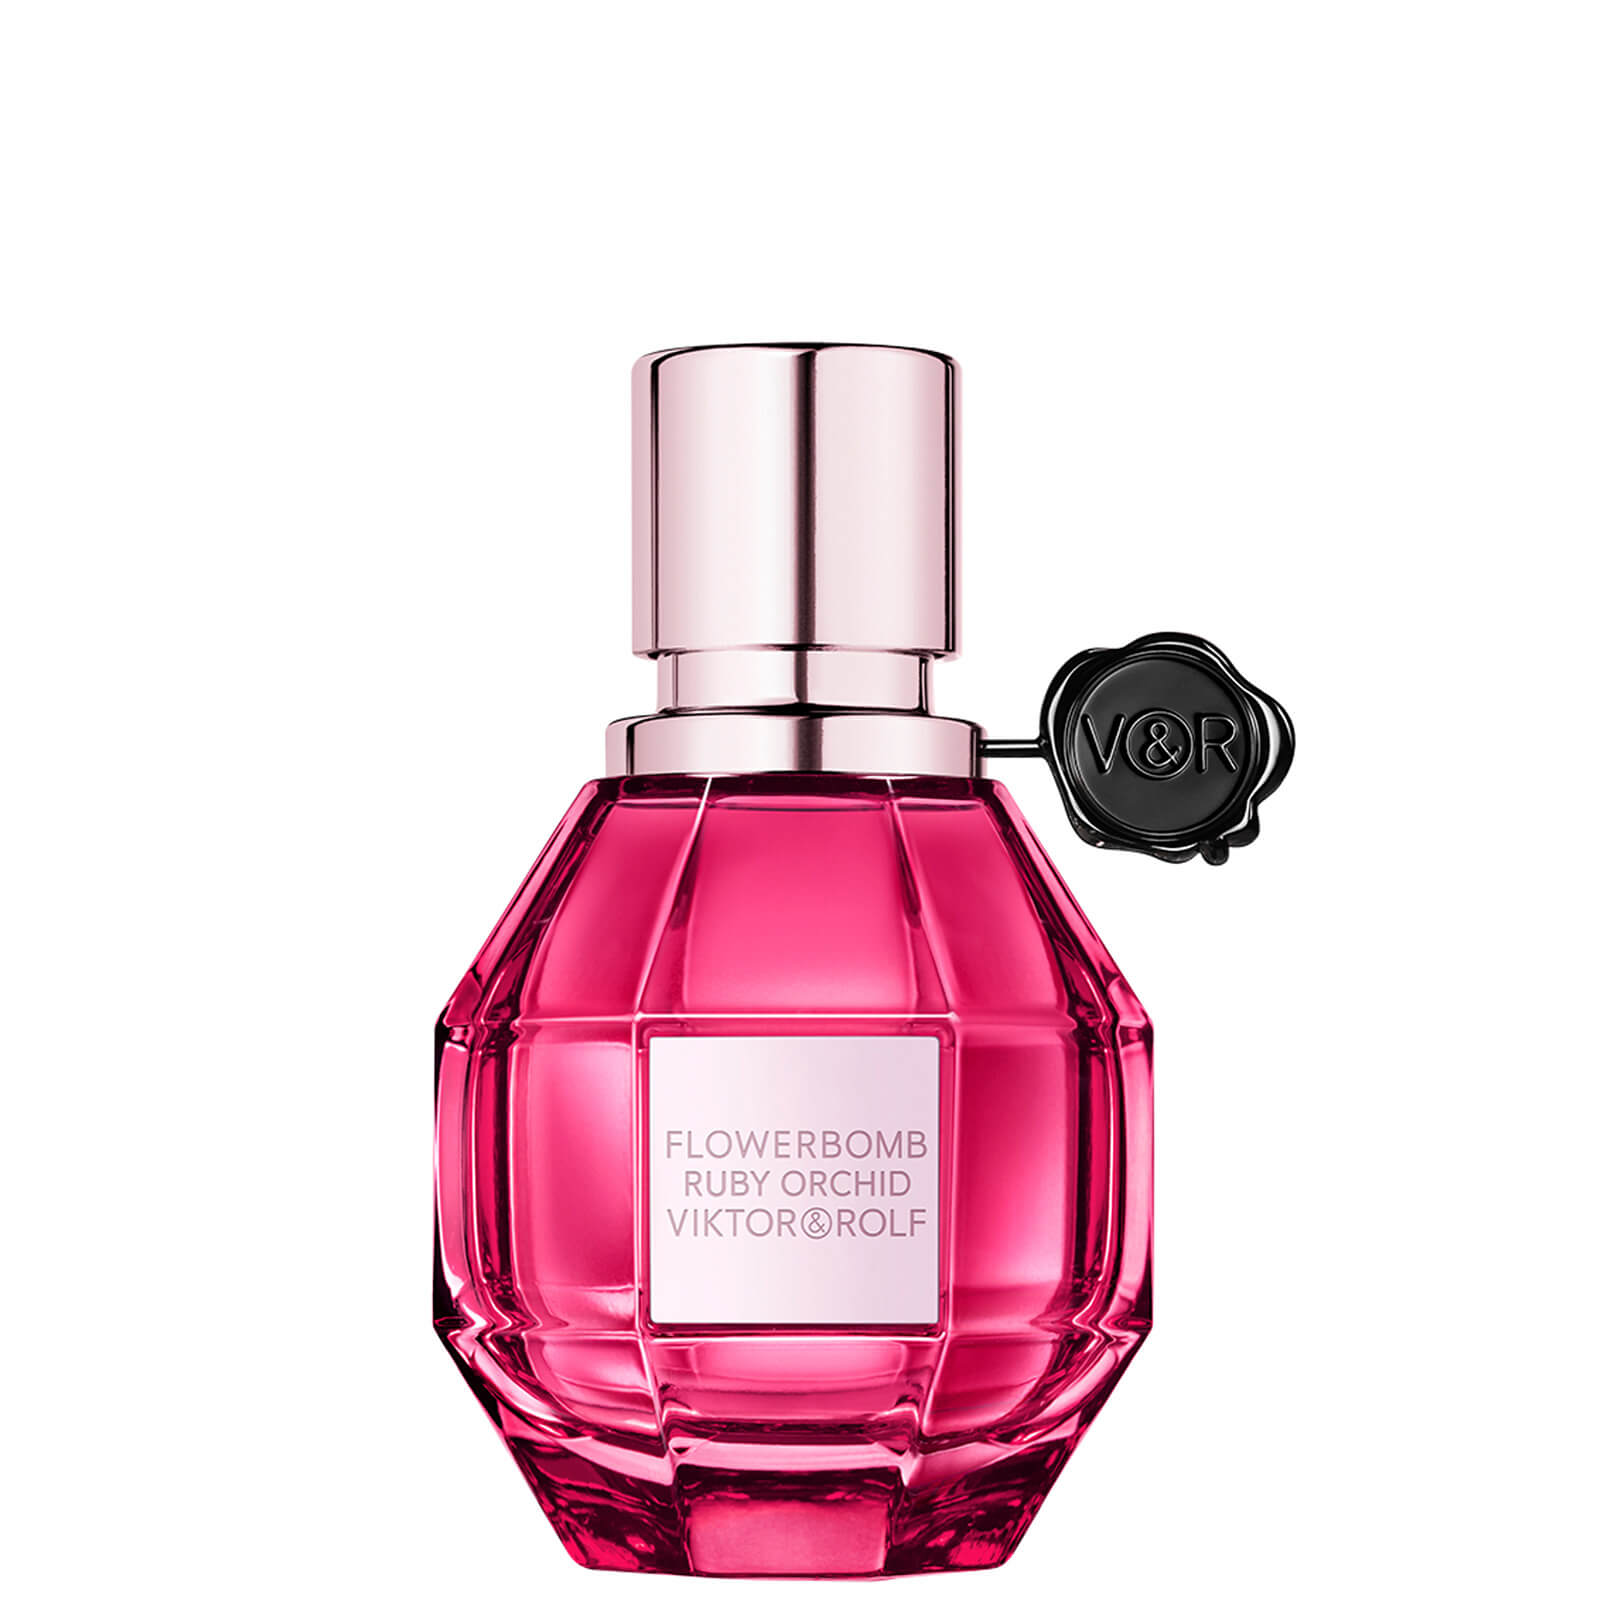 viktor & rolf flowerbomb ruby orchid eau de parfum - 30ml uomo